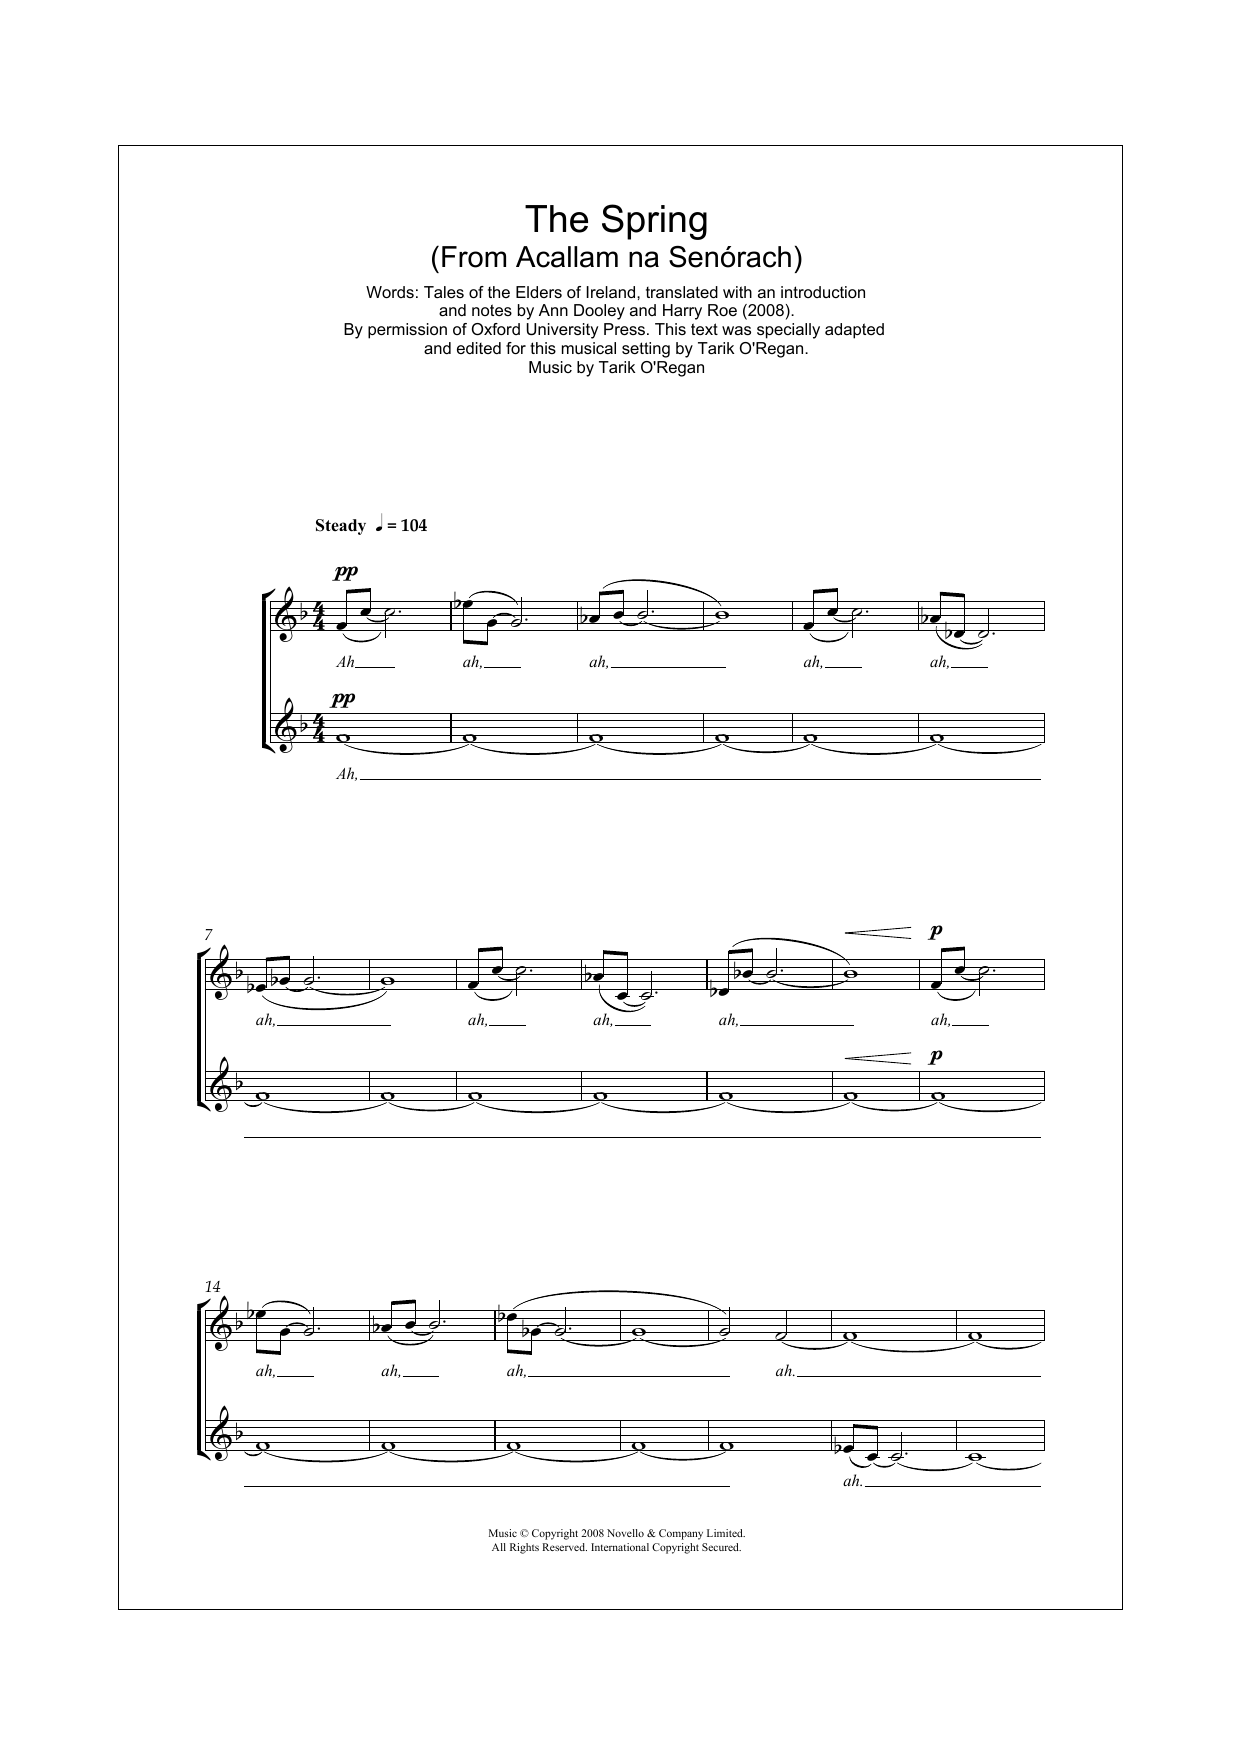 Tarik O'Regan The Spring (From Acallam na Senorach) Sheet Music Notes & Chords for SATB Choir - Download or Print PDF